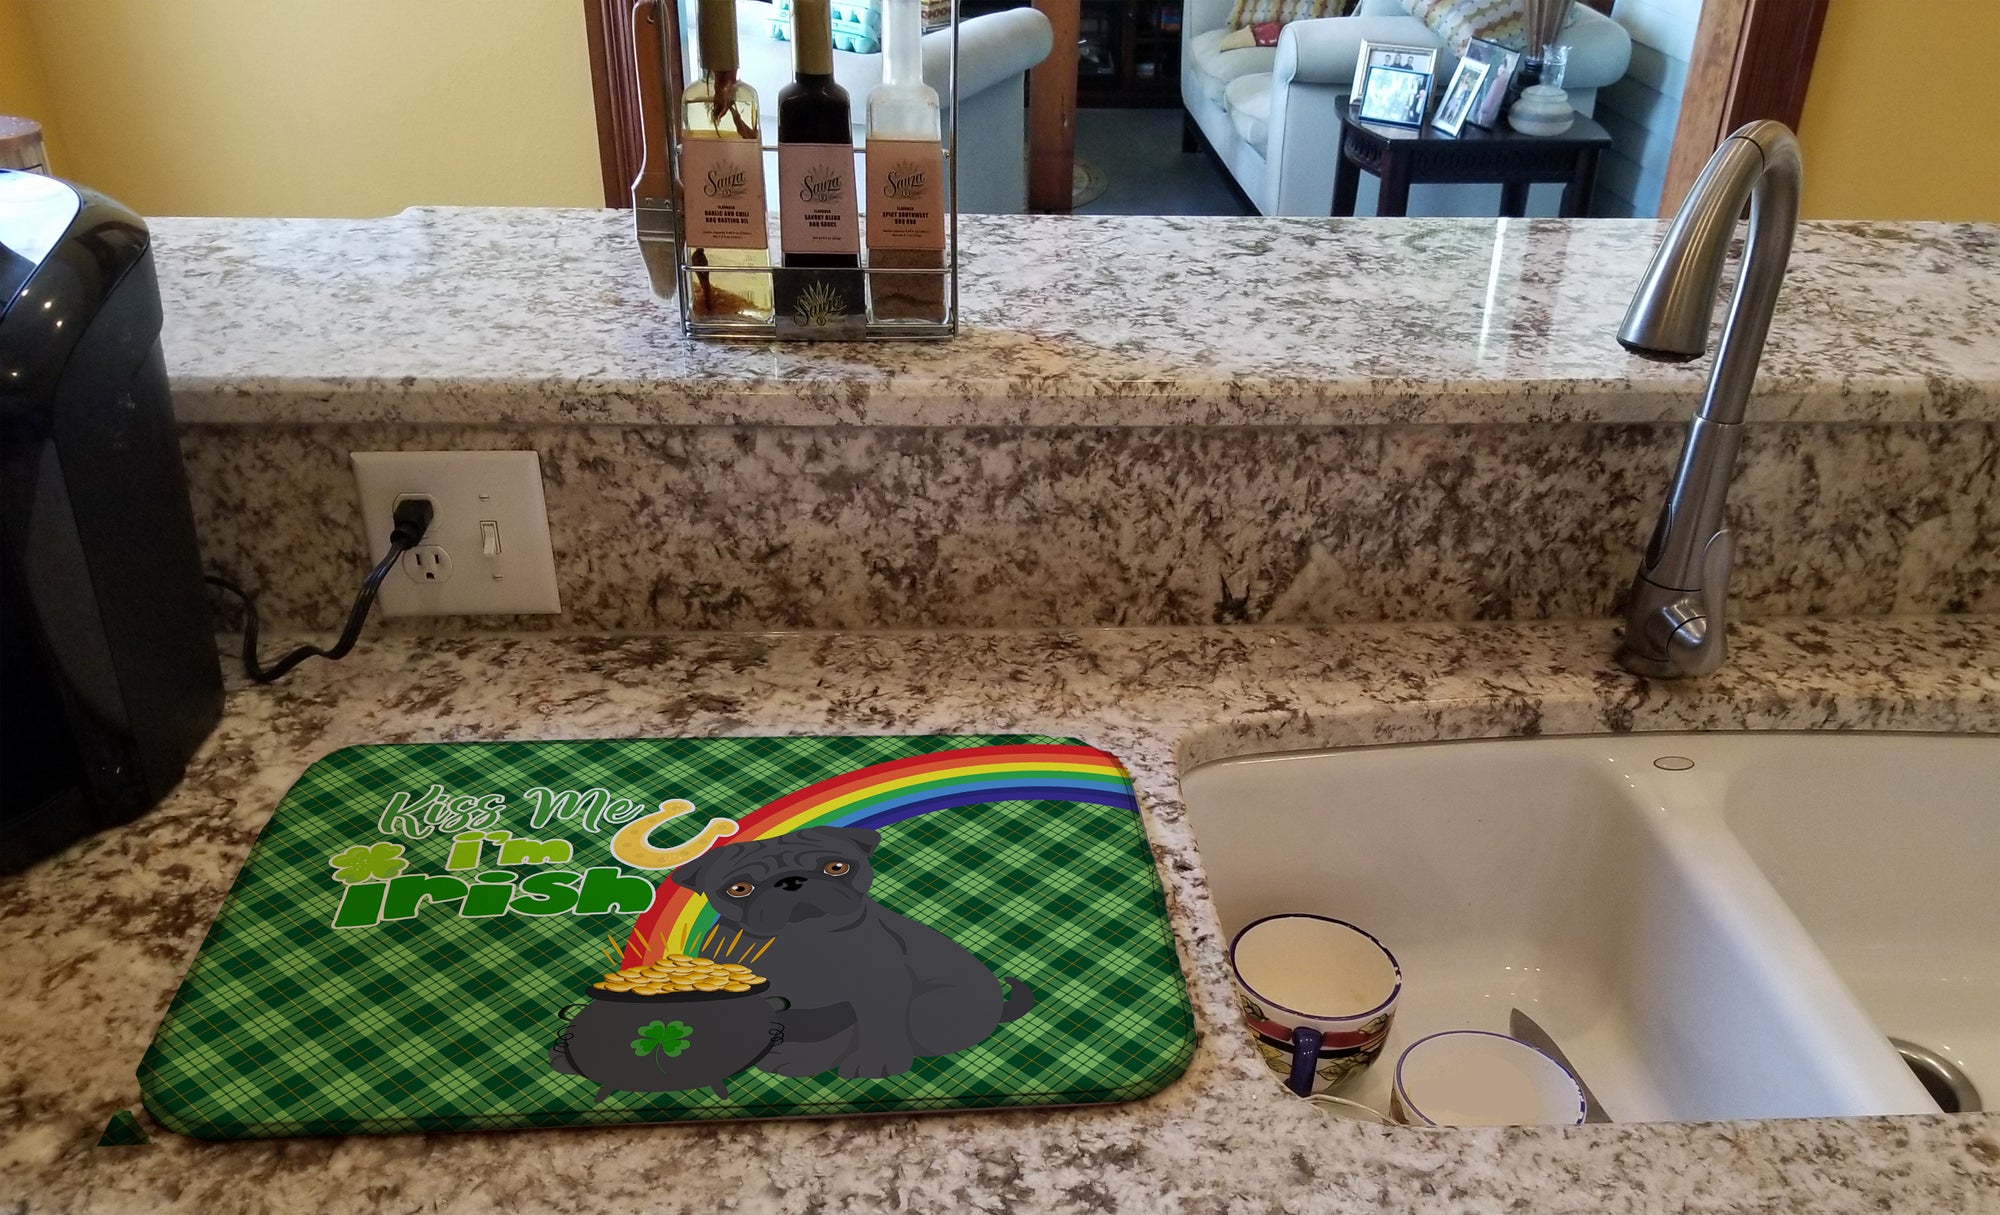 Black Pug St. Patrick's Day Dish Drying Mat